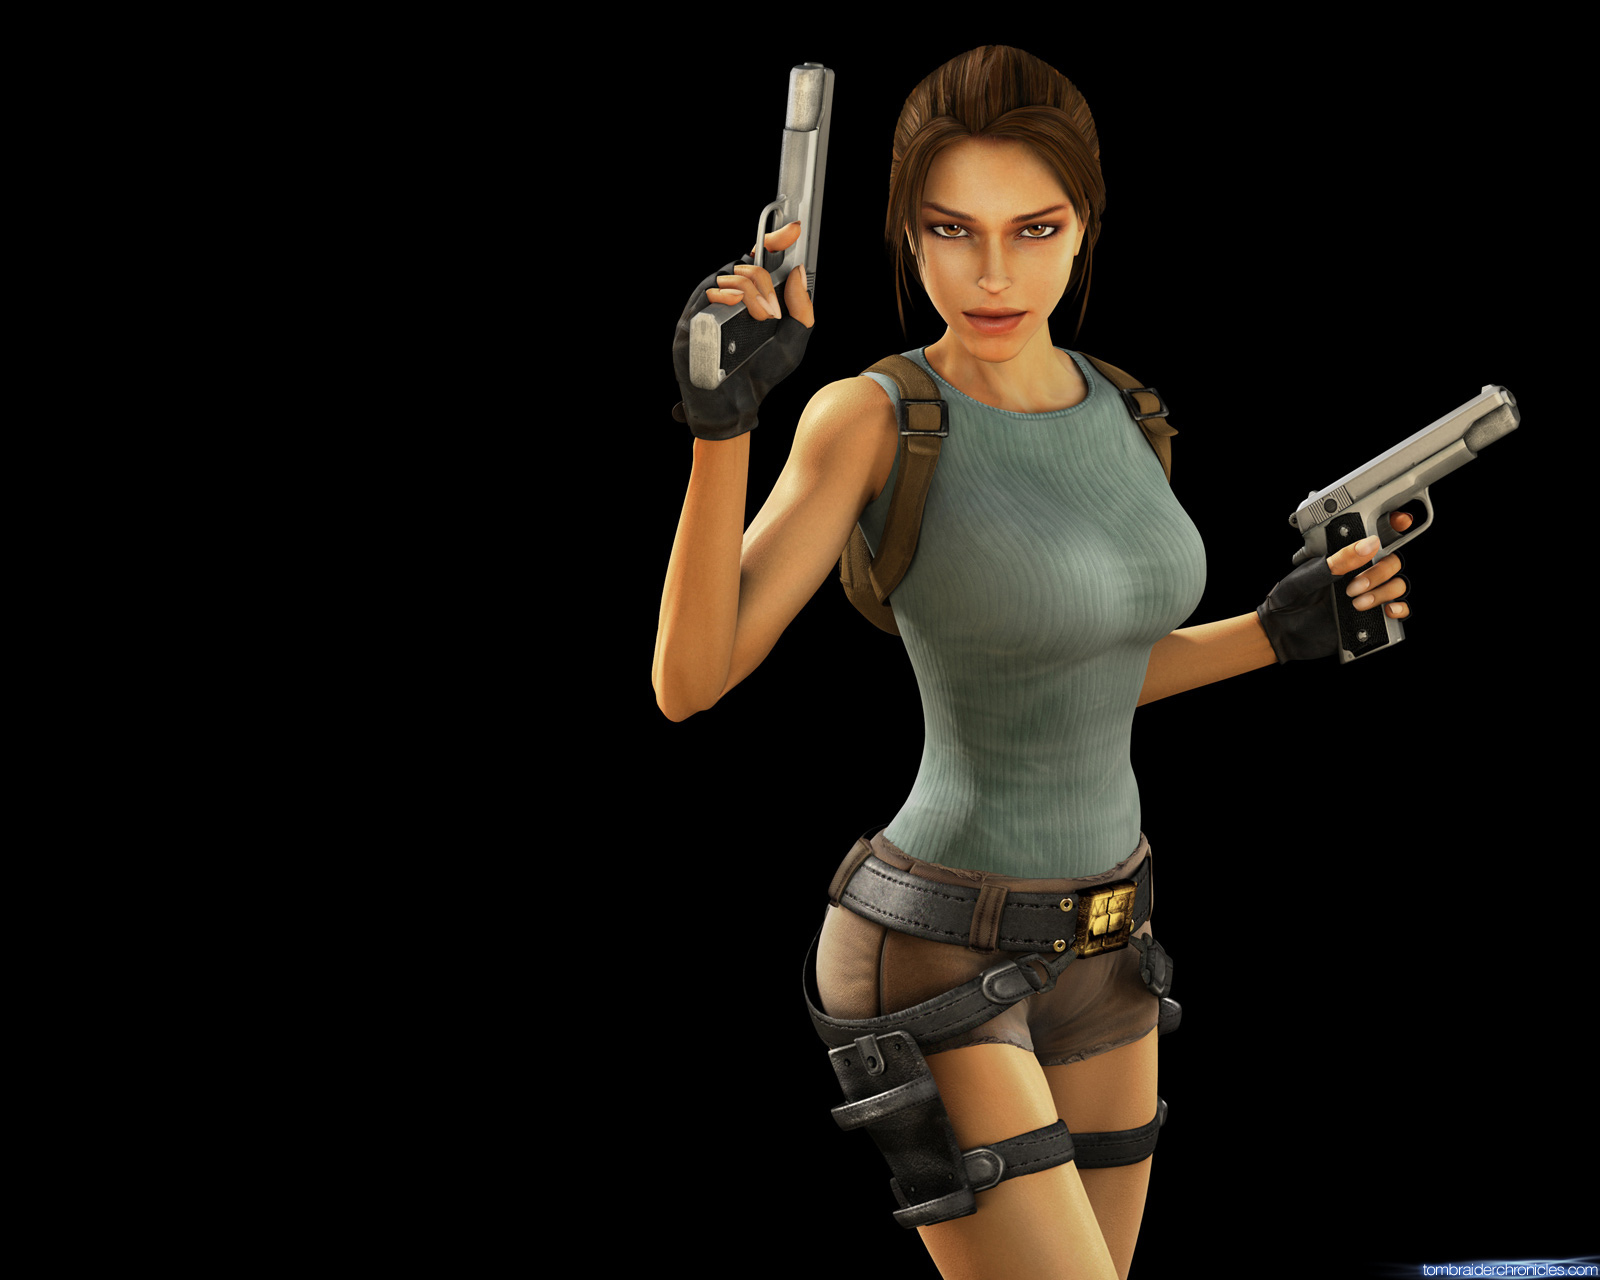 Lara Croft: Tomb Raider Backgrounds, Compatible - PC, Mobile, Gadgets| 1600x1280 px